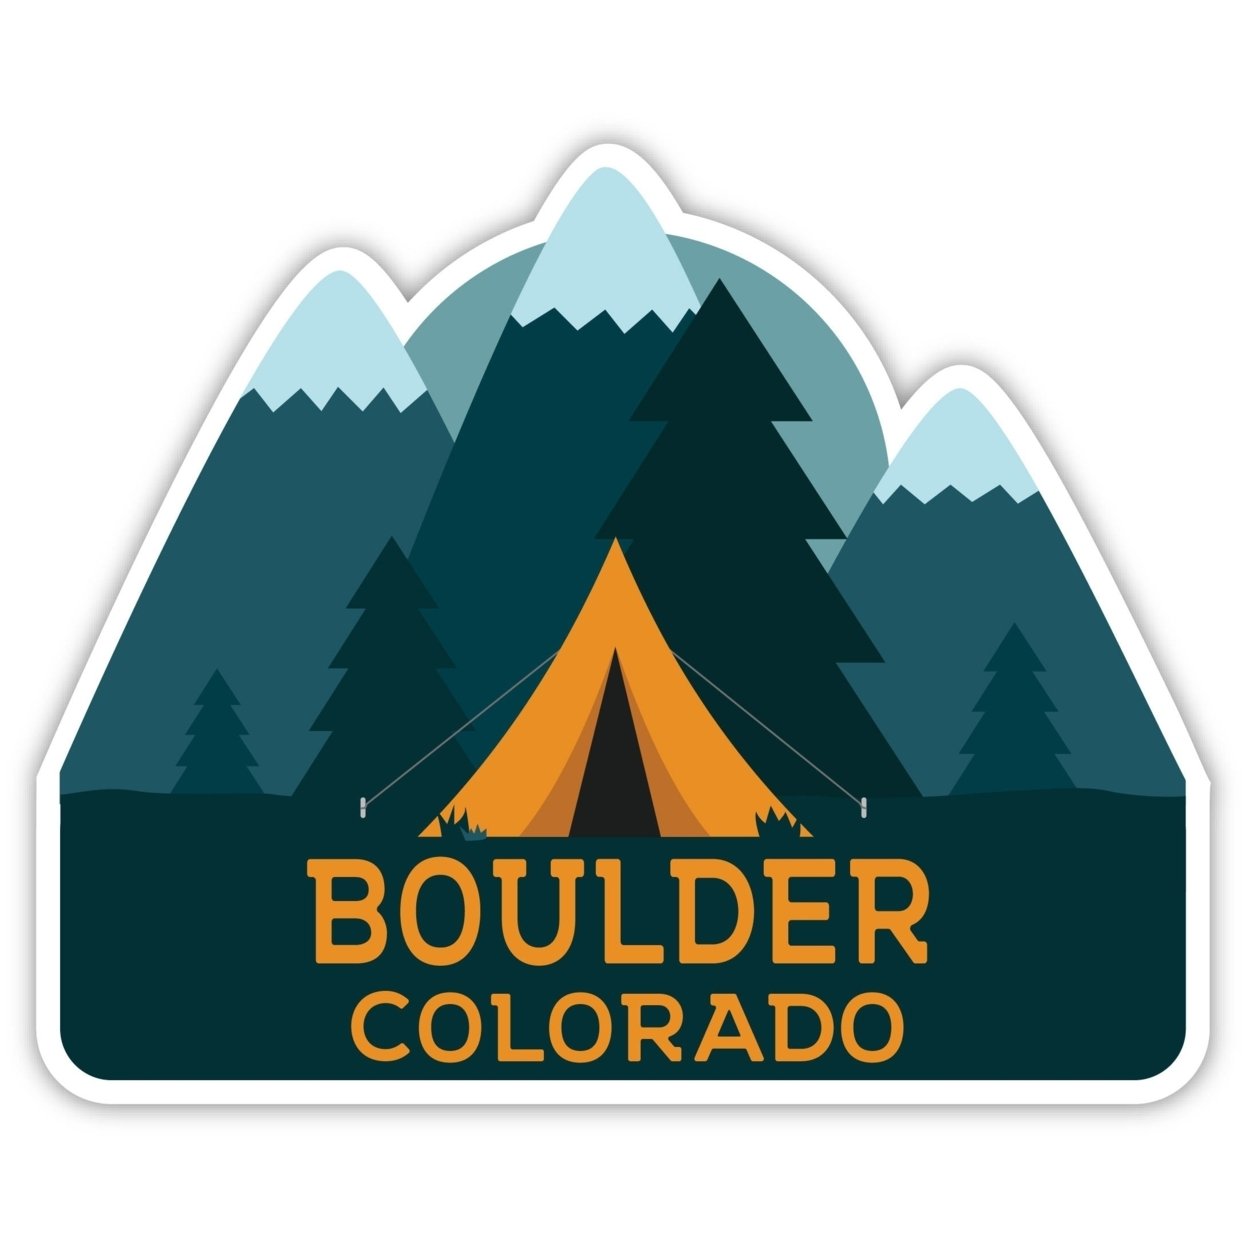 Boulder Colorado Souvenir Decorative Stickers (Choose Theme And Size) - 4-Pack, 12-Inch, Adventures Awaits